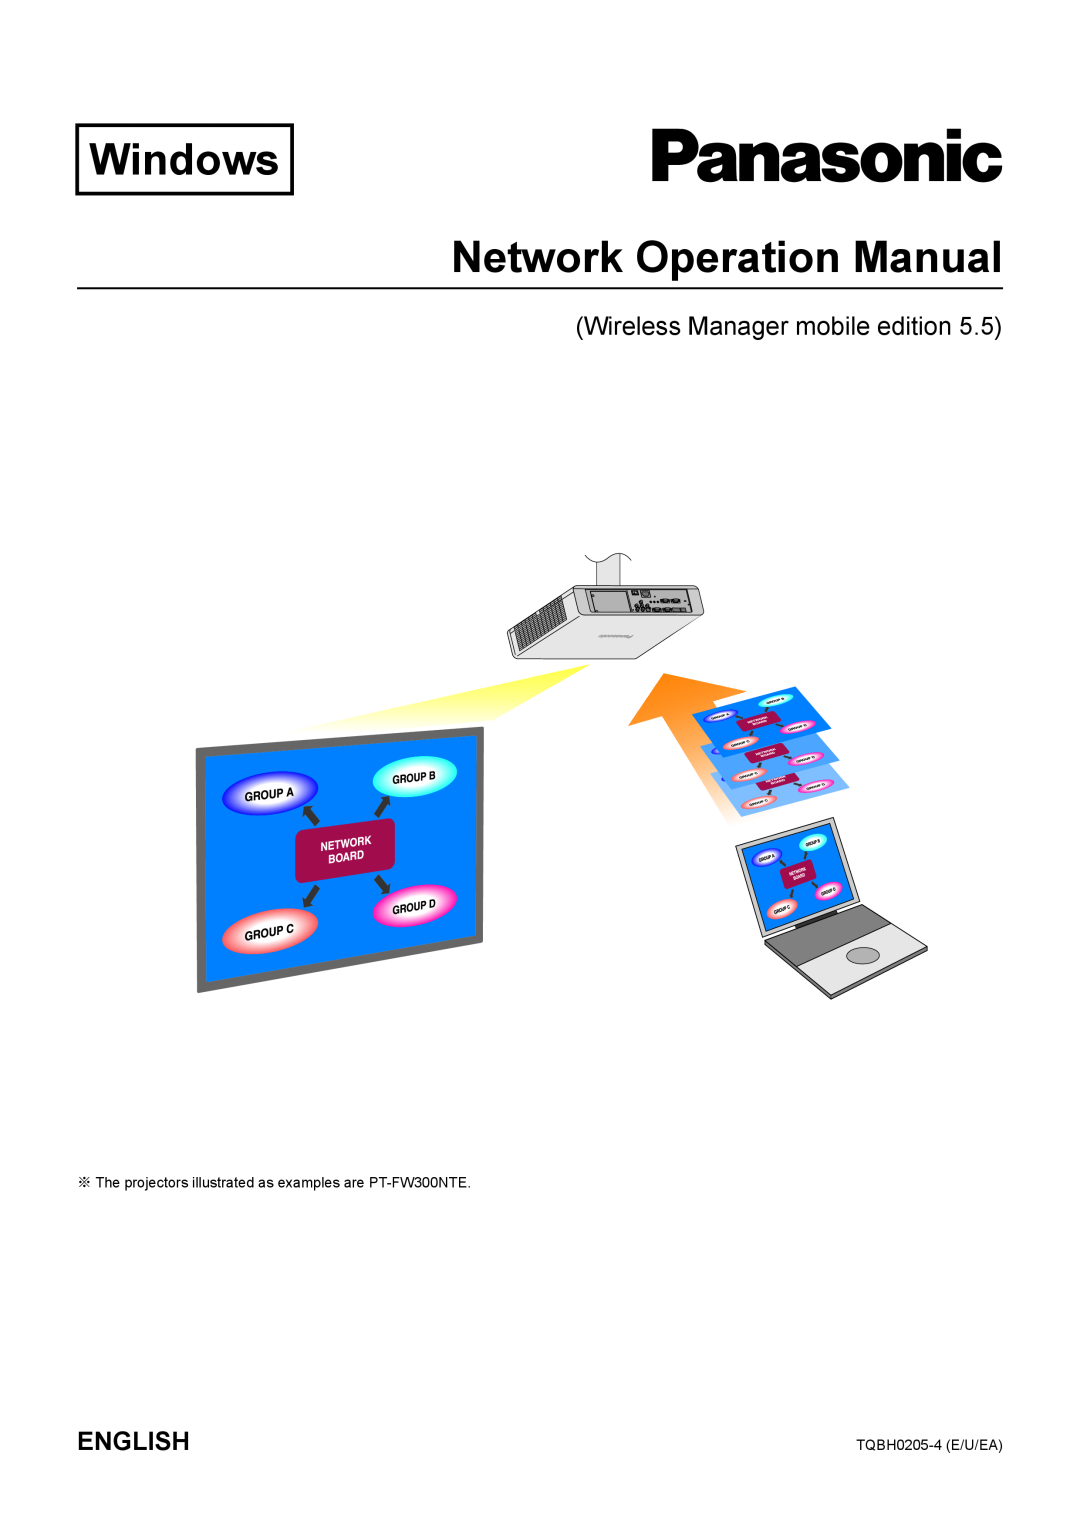 Panasonic TQBH0205-4 operation manual English, Windows, Network Operation Manual, Wireless Manager mobile edition 